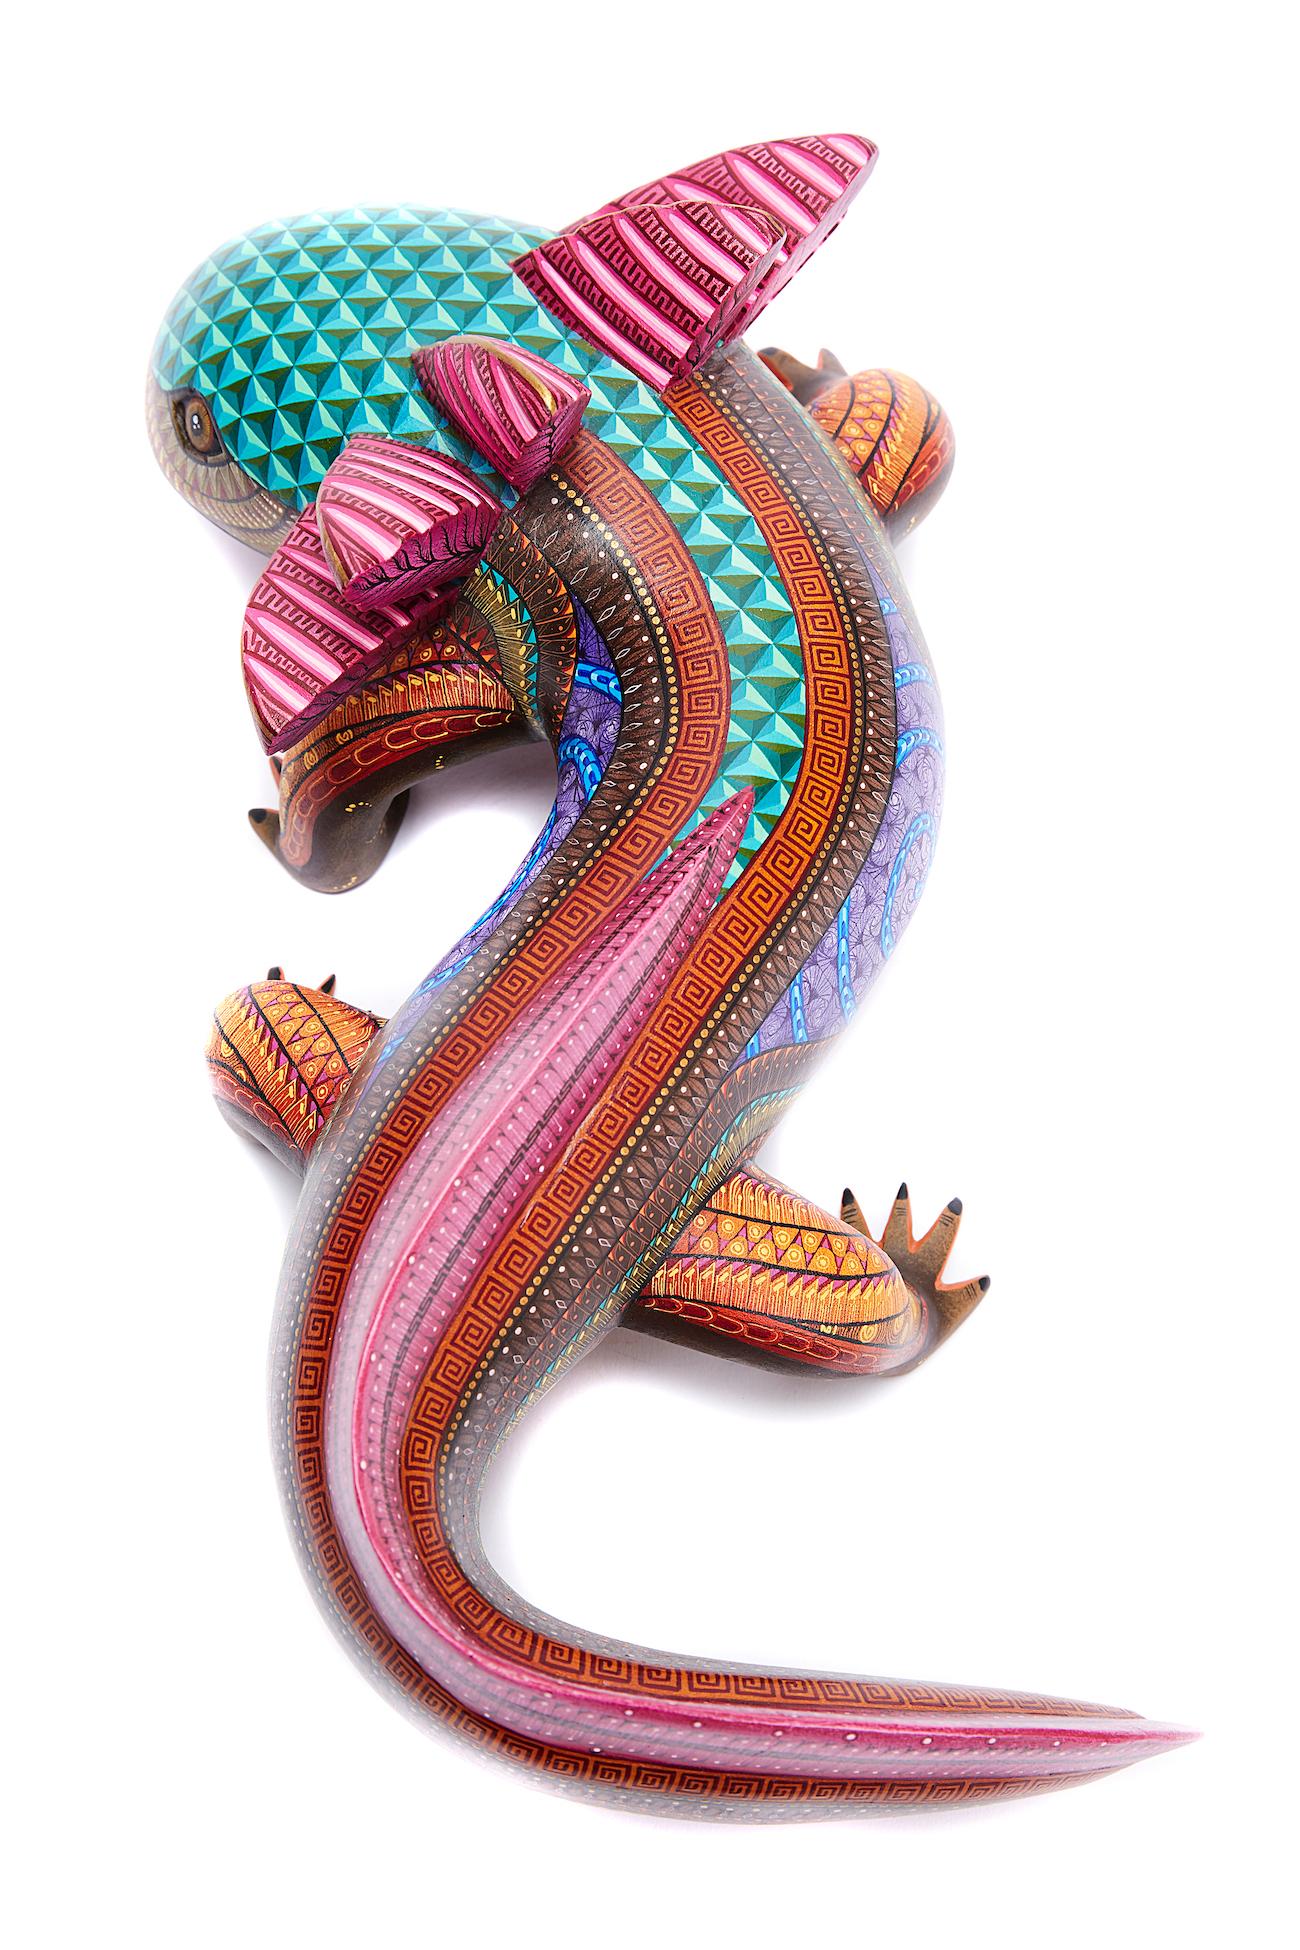 Ajolote - Axolotl - Mexican Folk Art  Cactus Fine Art 10